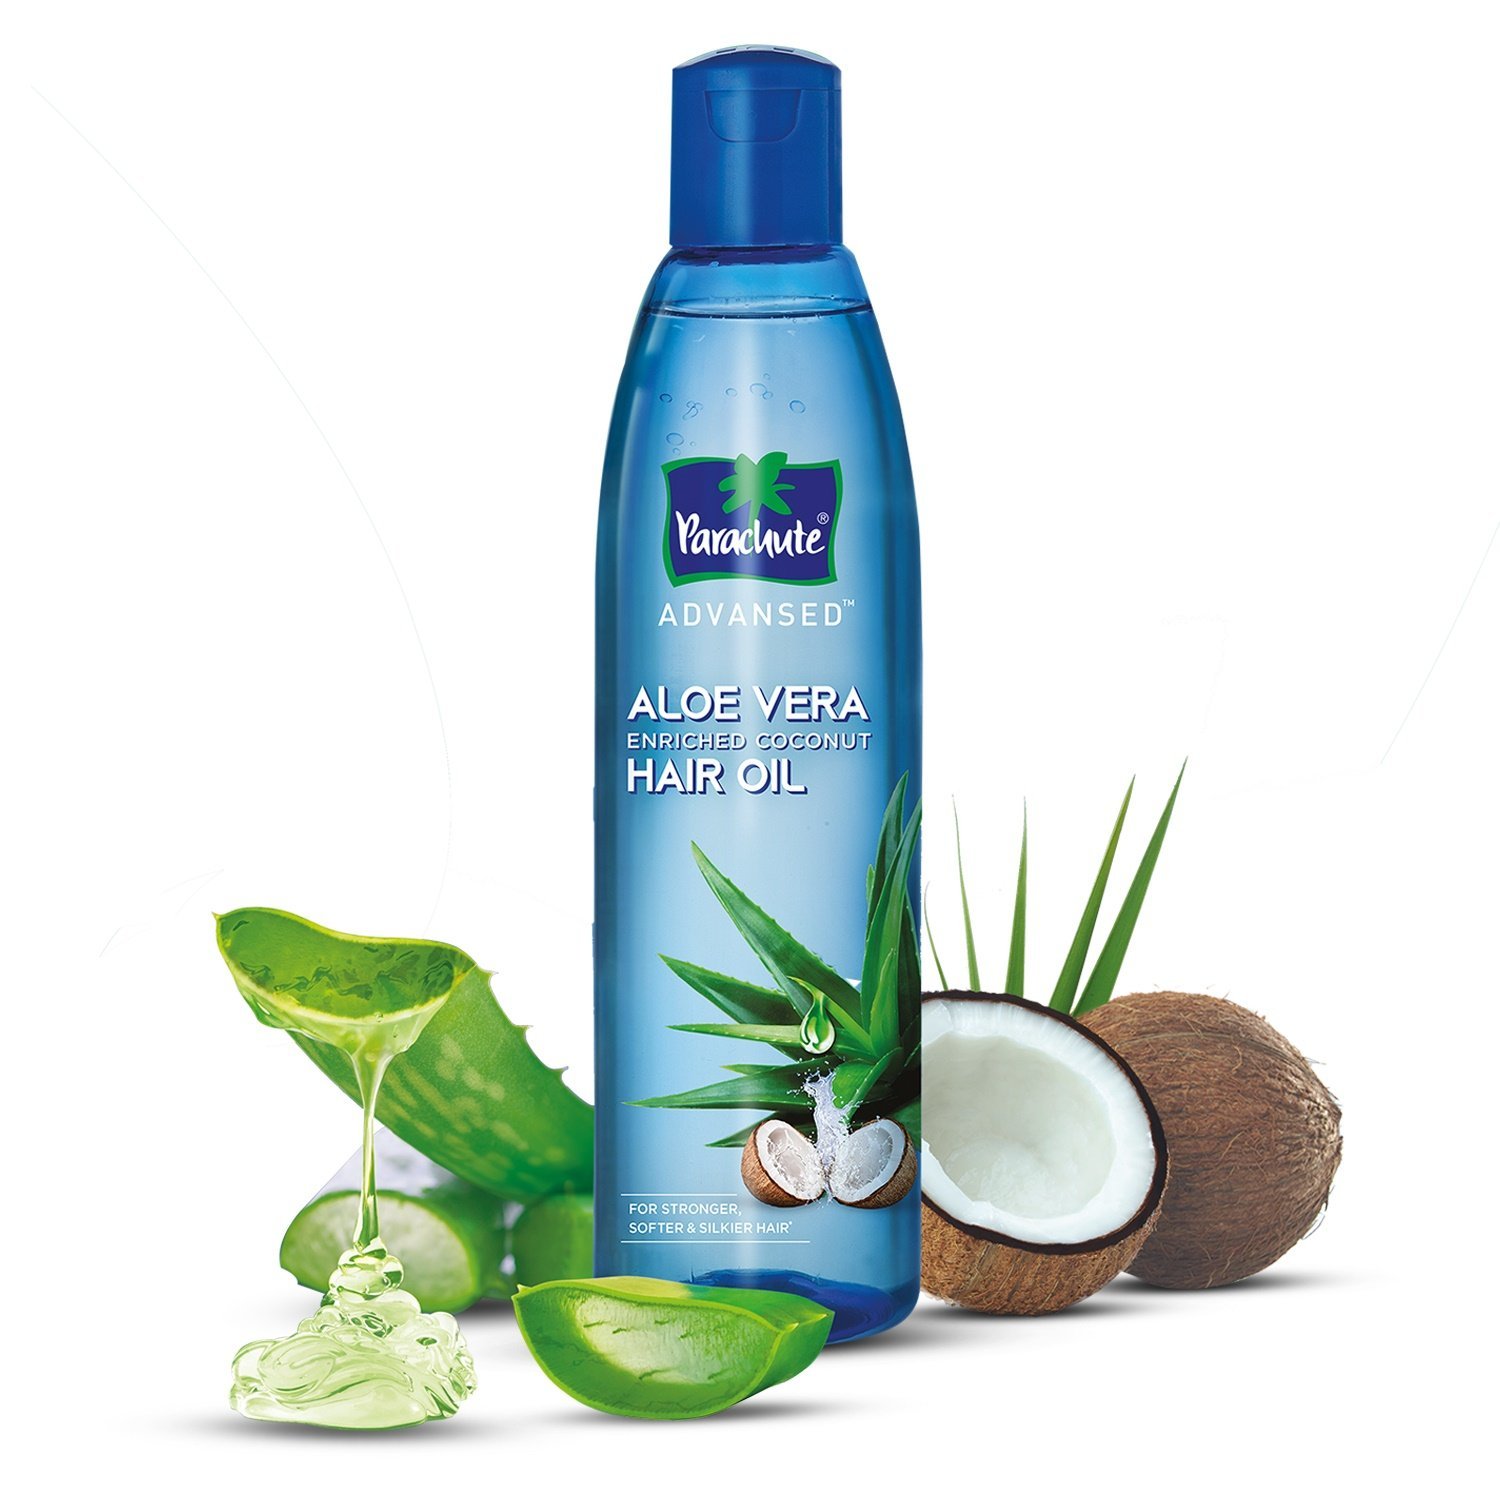 Parachute Advansed aloe vera enriched coconut hair oil 150ml | Shopee ...